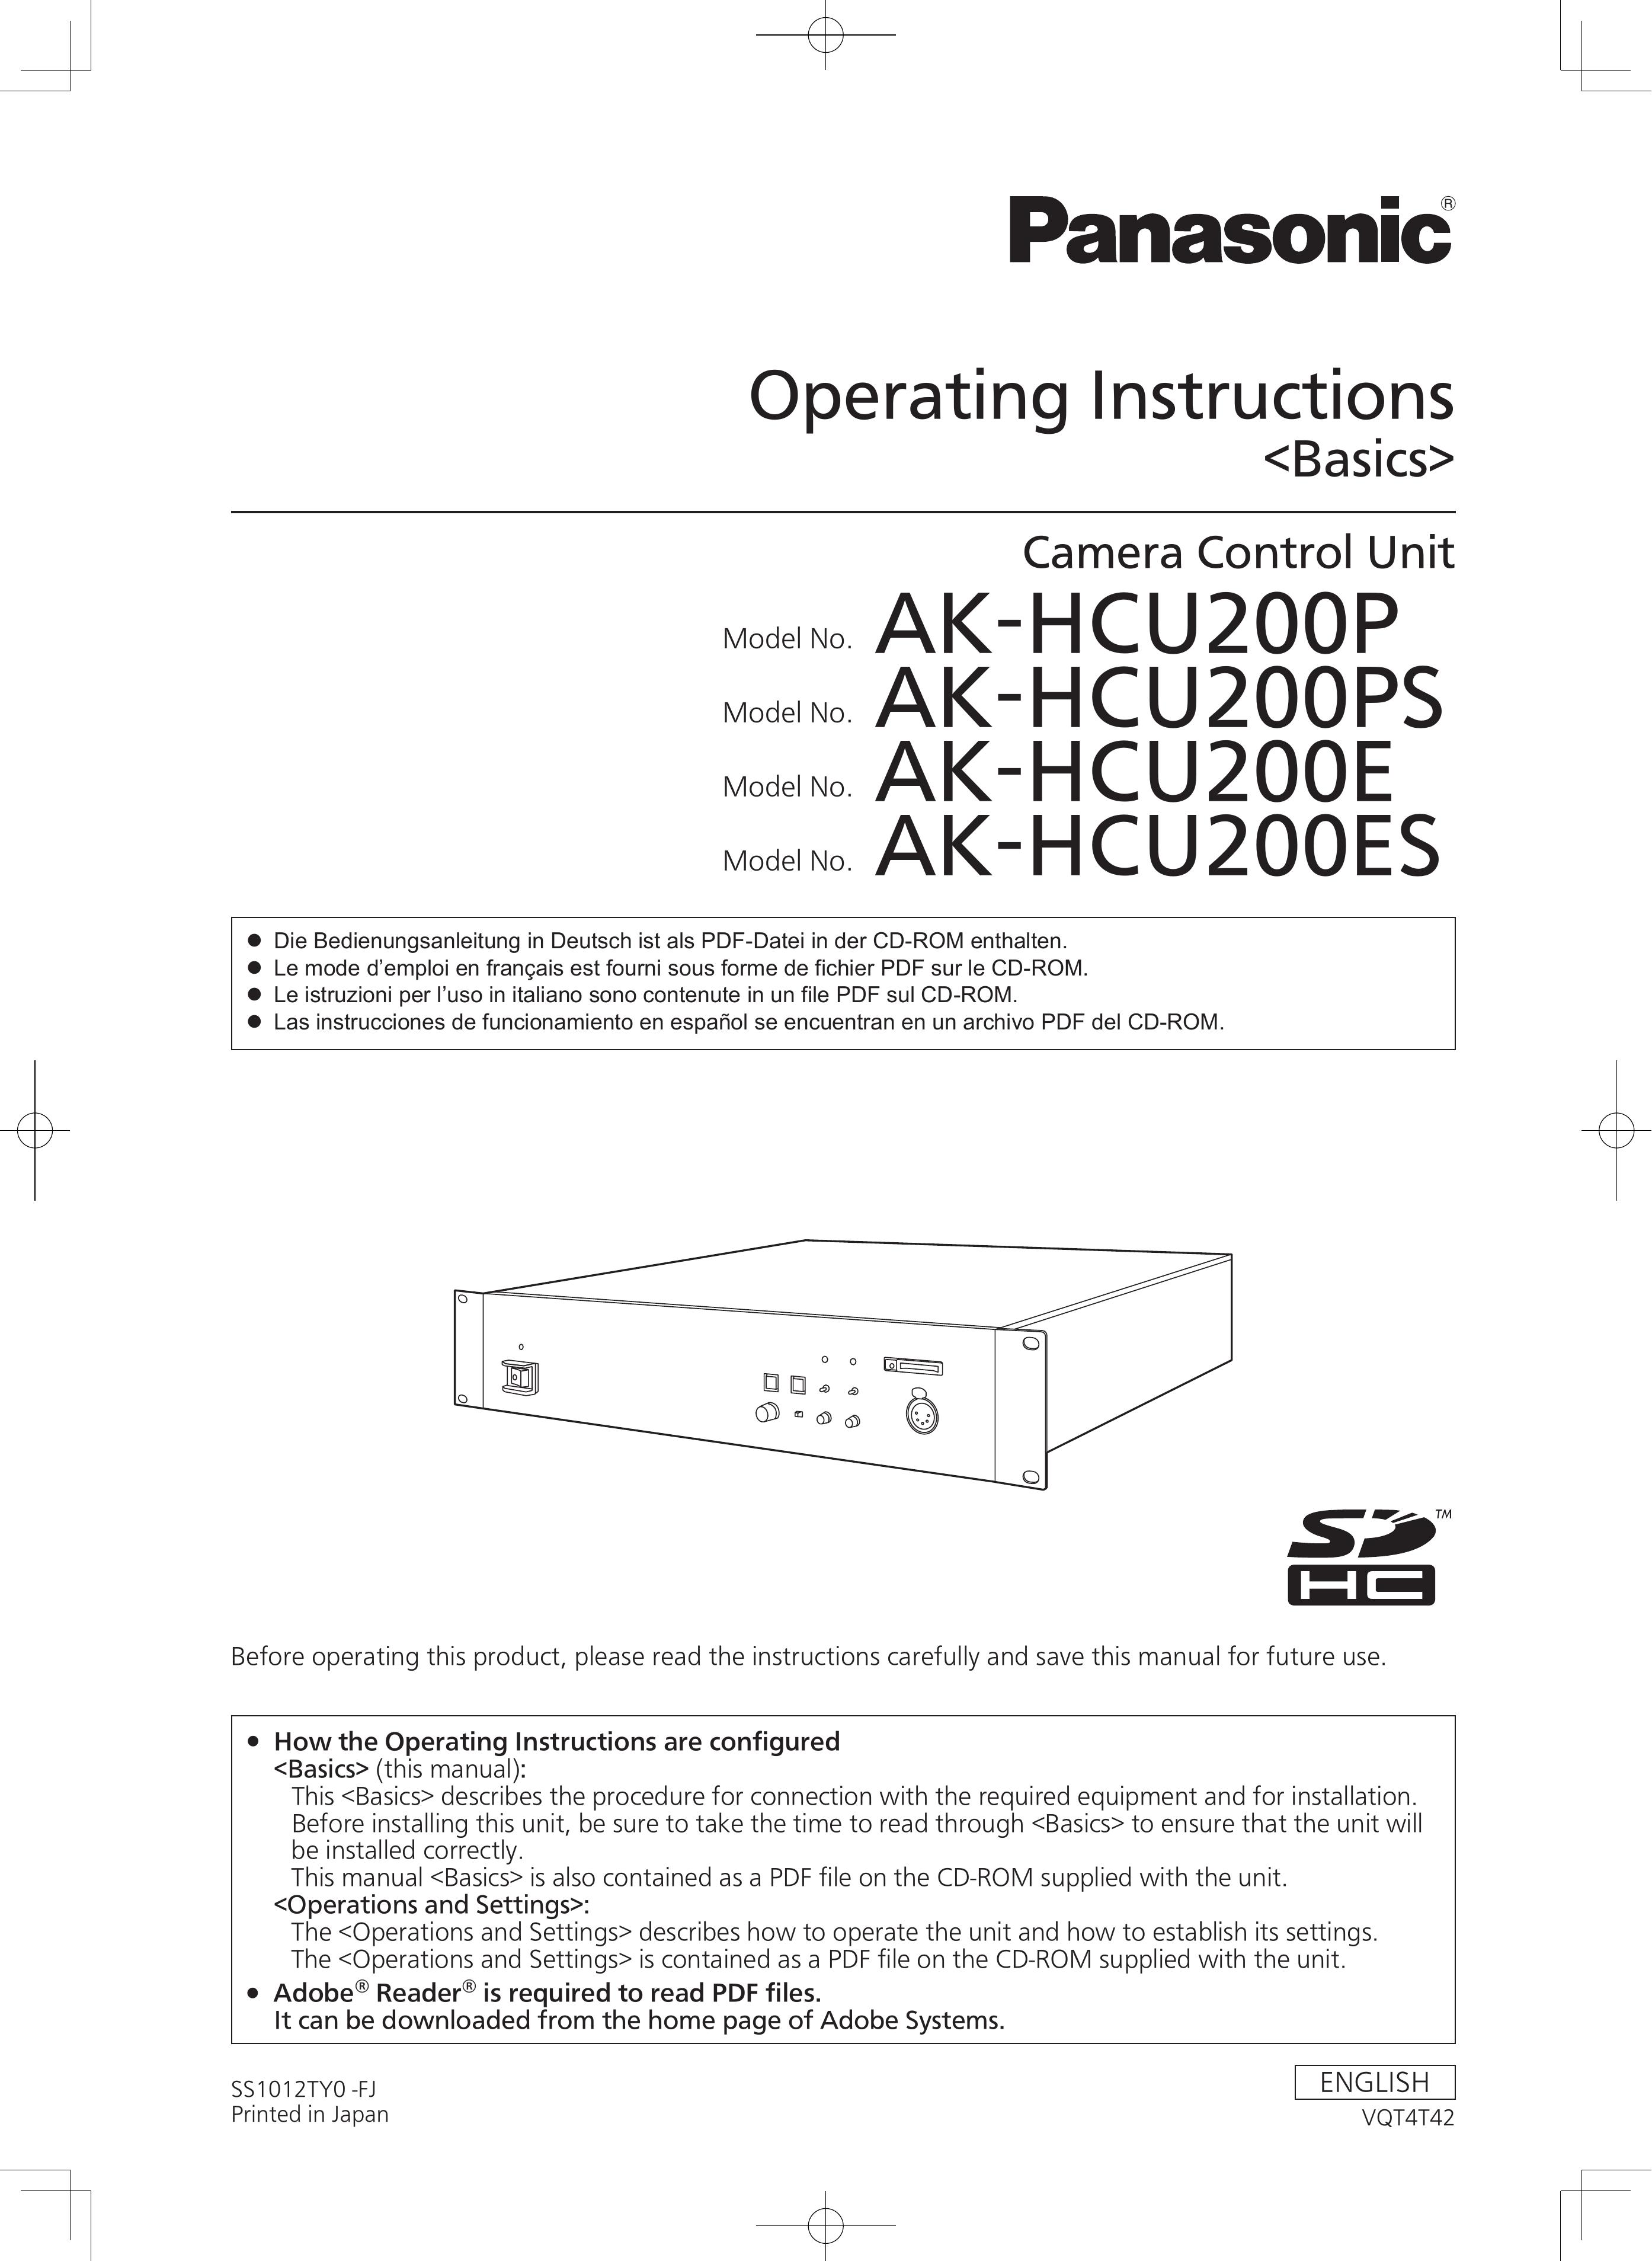 Panasonic AK-HCU200PS Camera Accessories User Manual